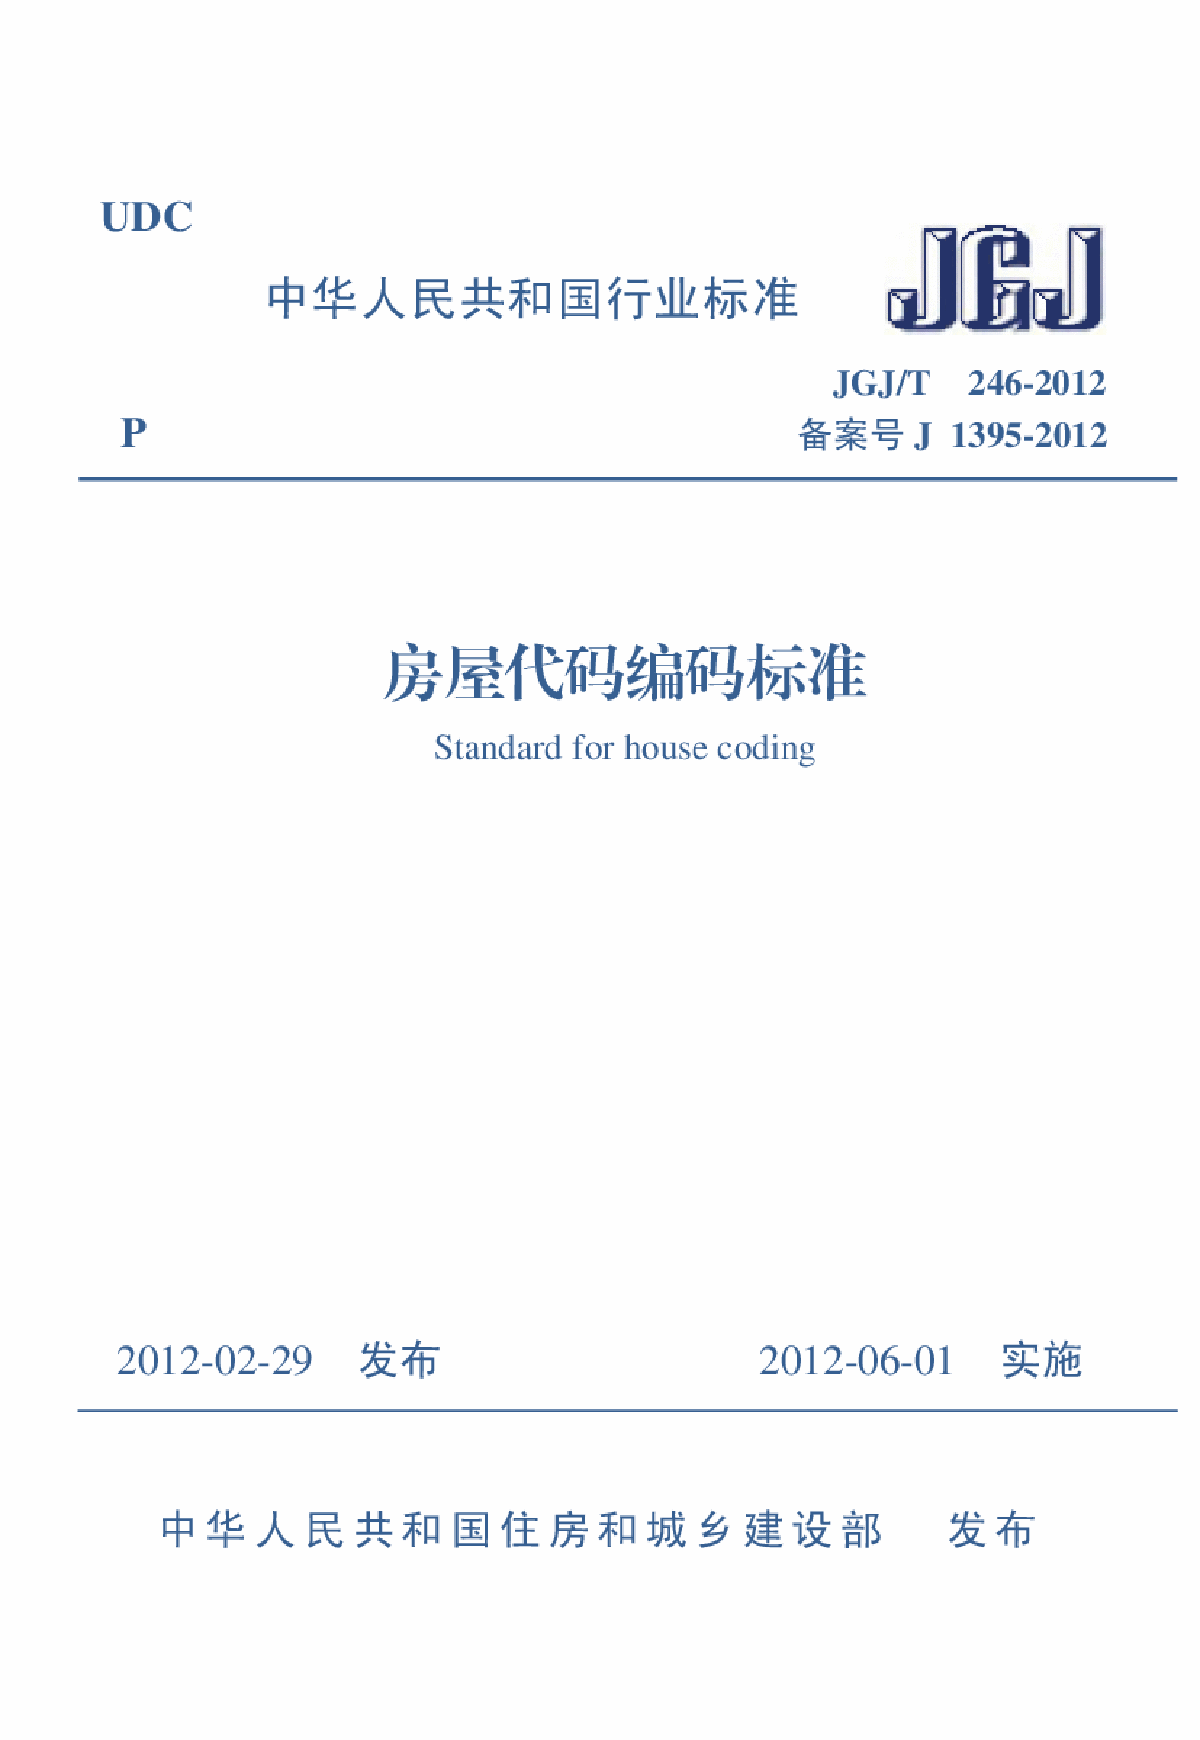 JGJT246-2012 房屋代码编码标准